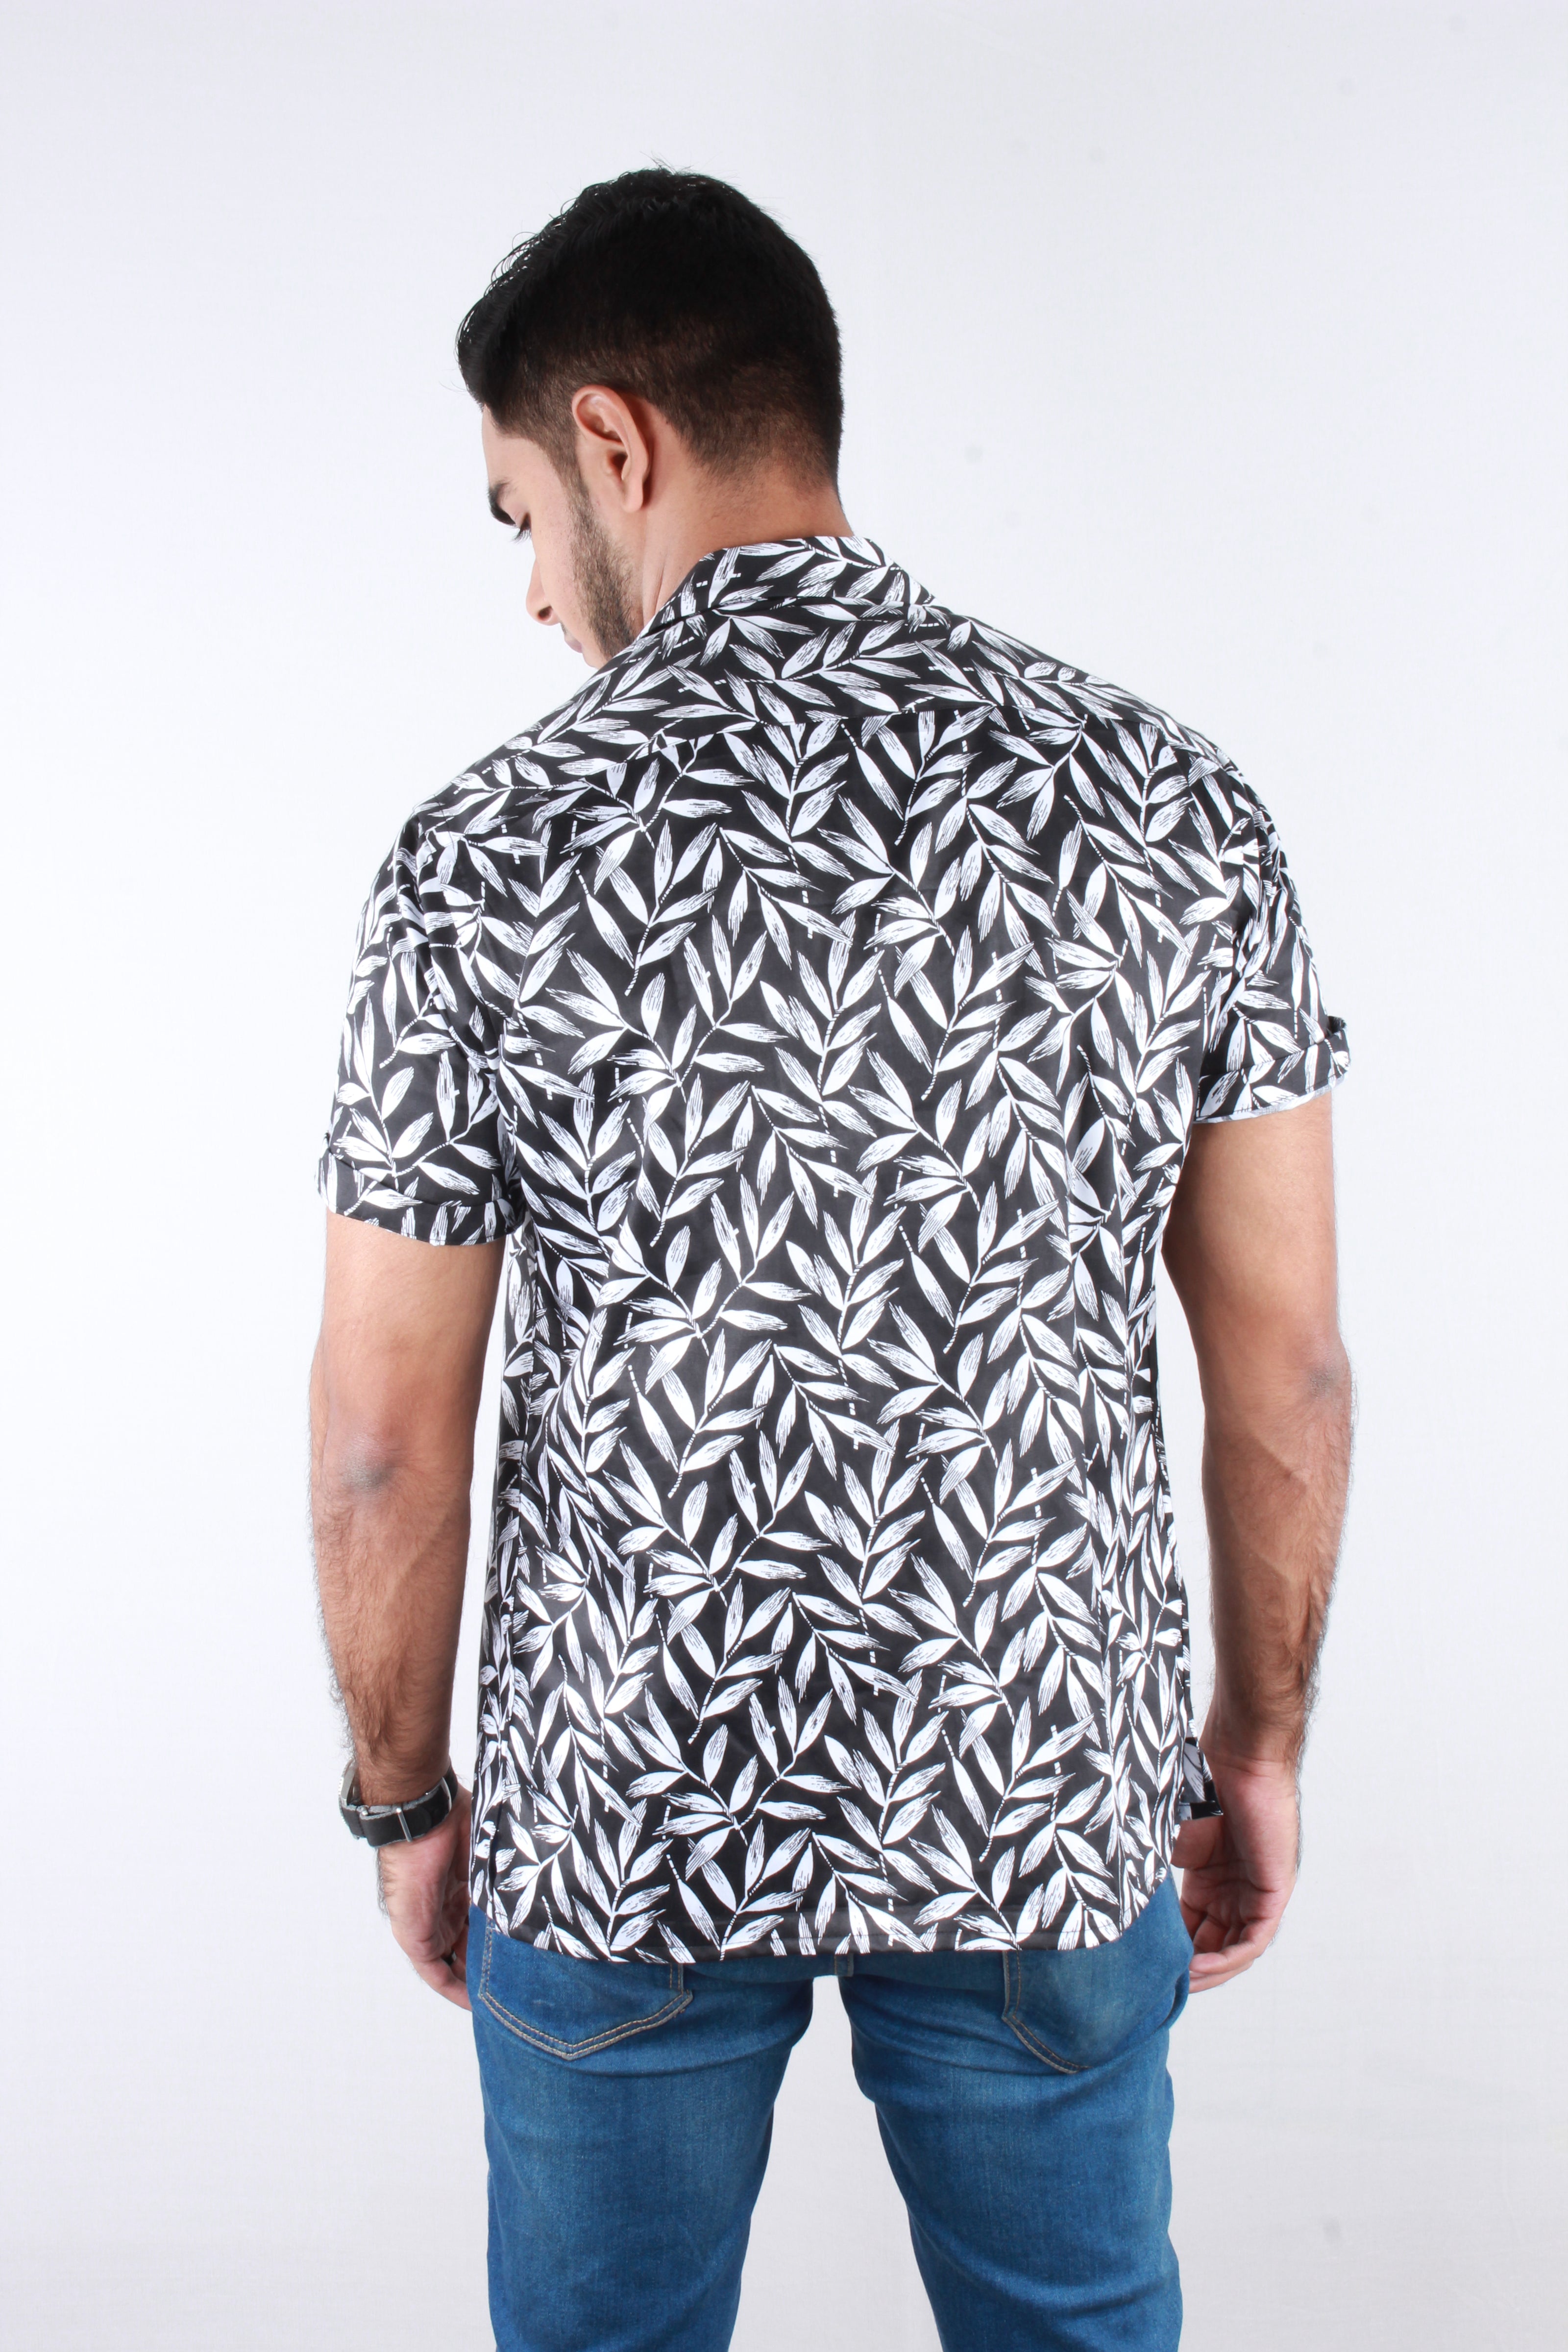 Black and White Leafy Printed Casual Shirt - Bosphorus Fashion